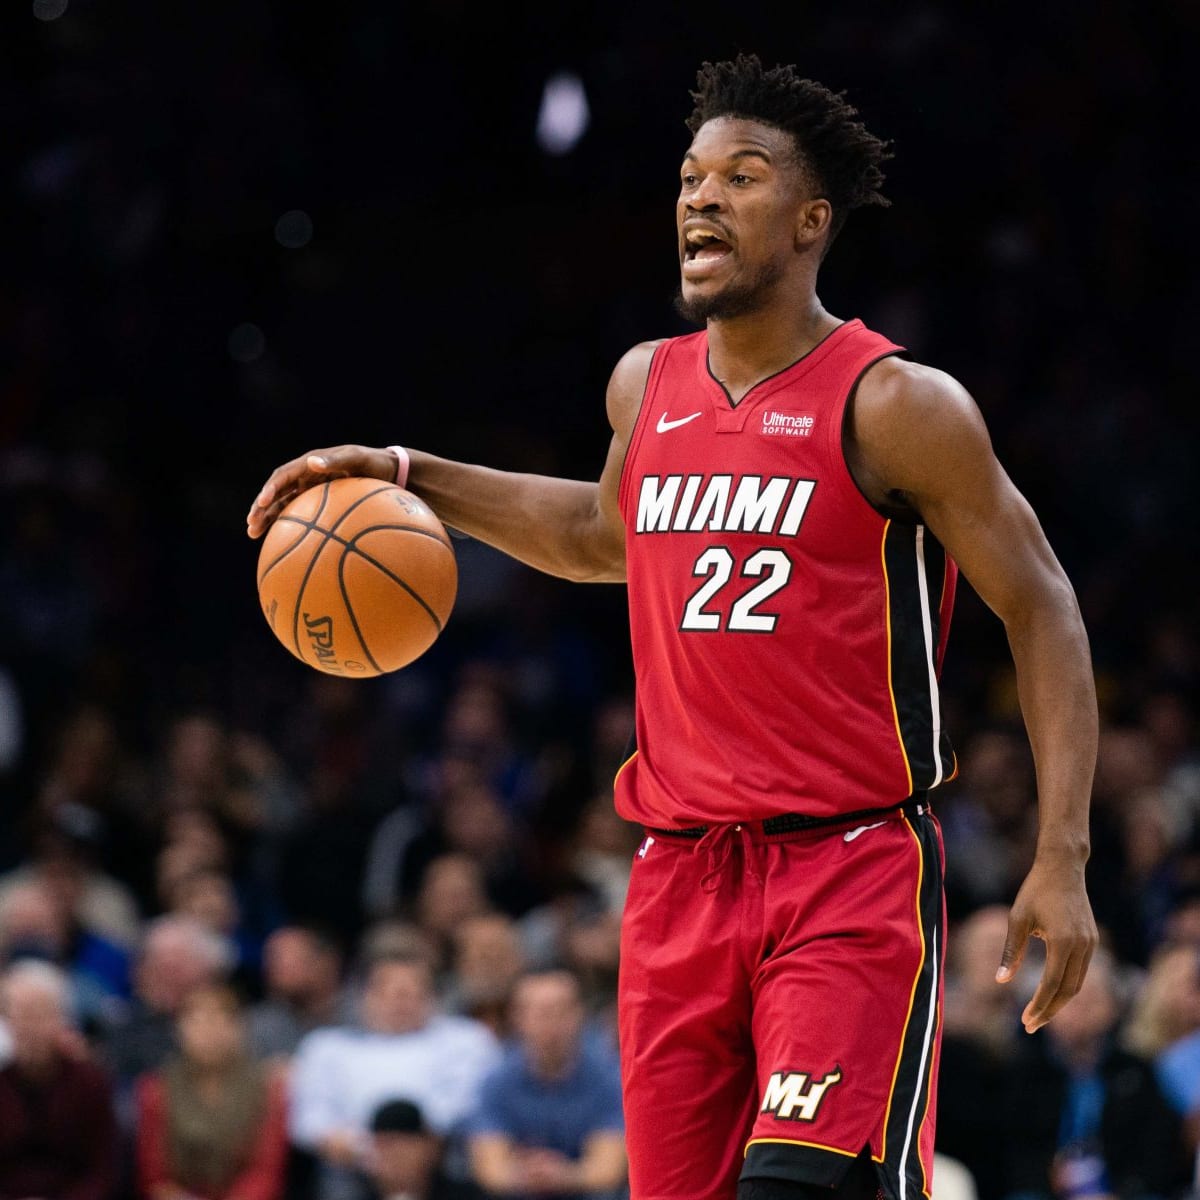 Dwyane Wade's unheralded Game 2 defense - ESPN - Miami Heat Index